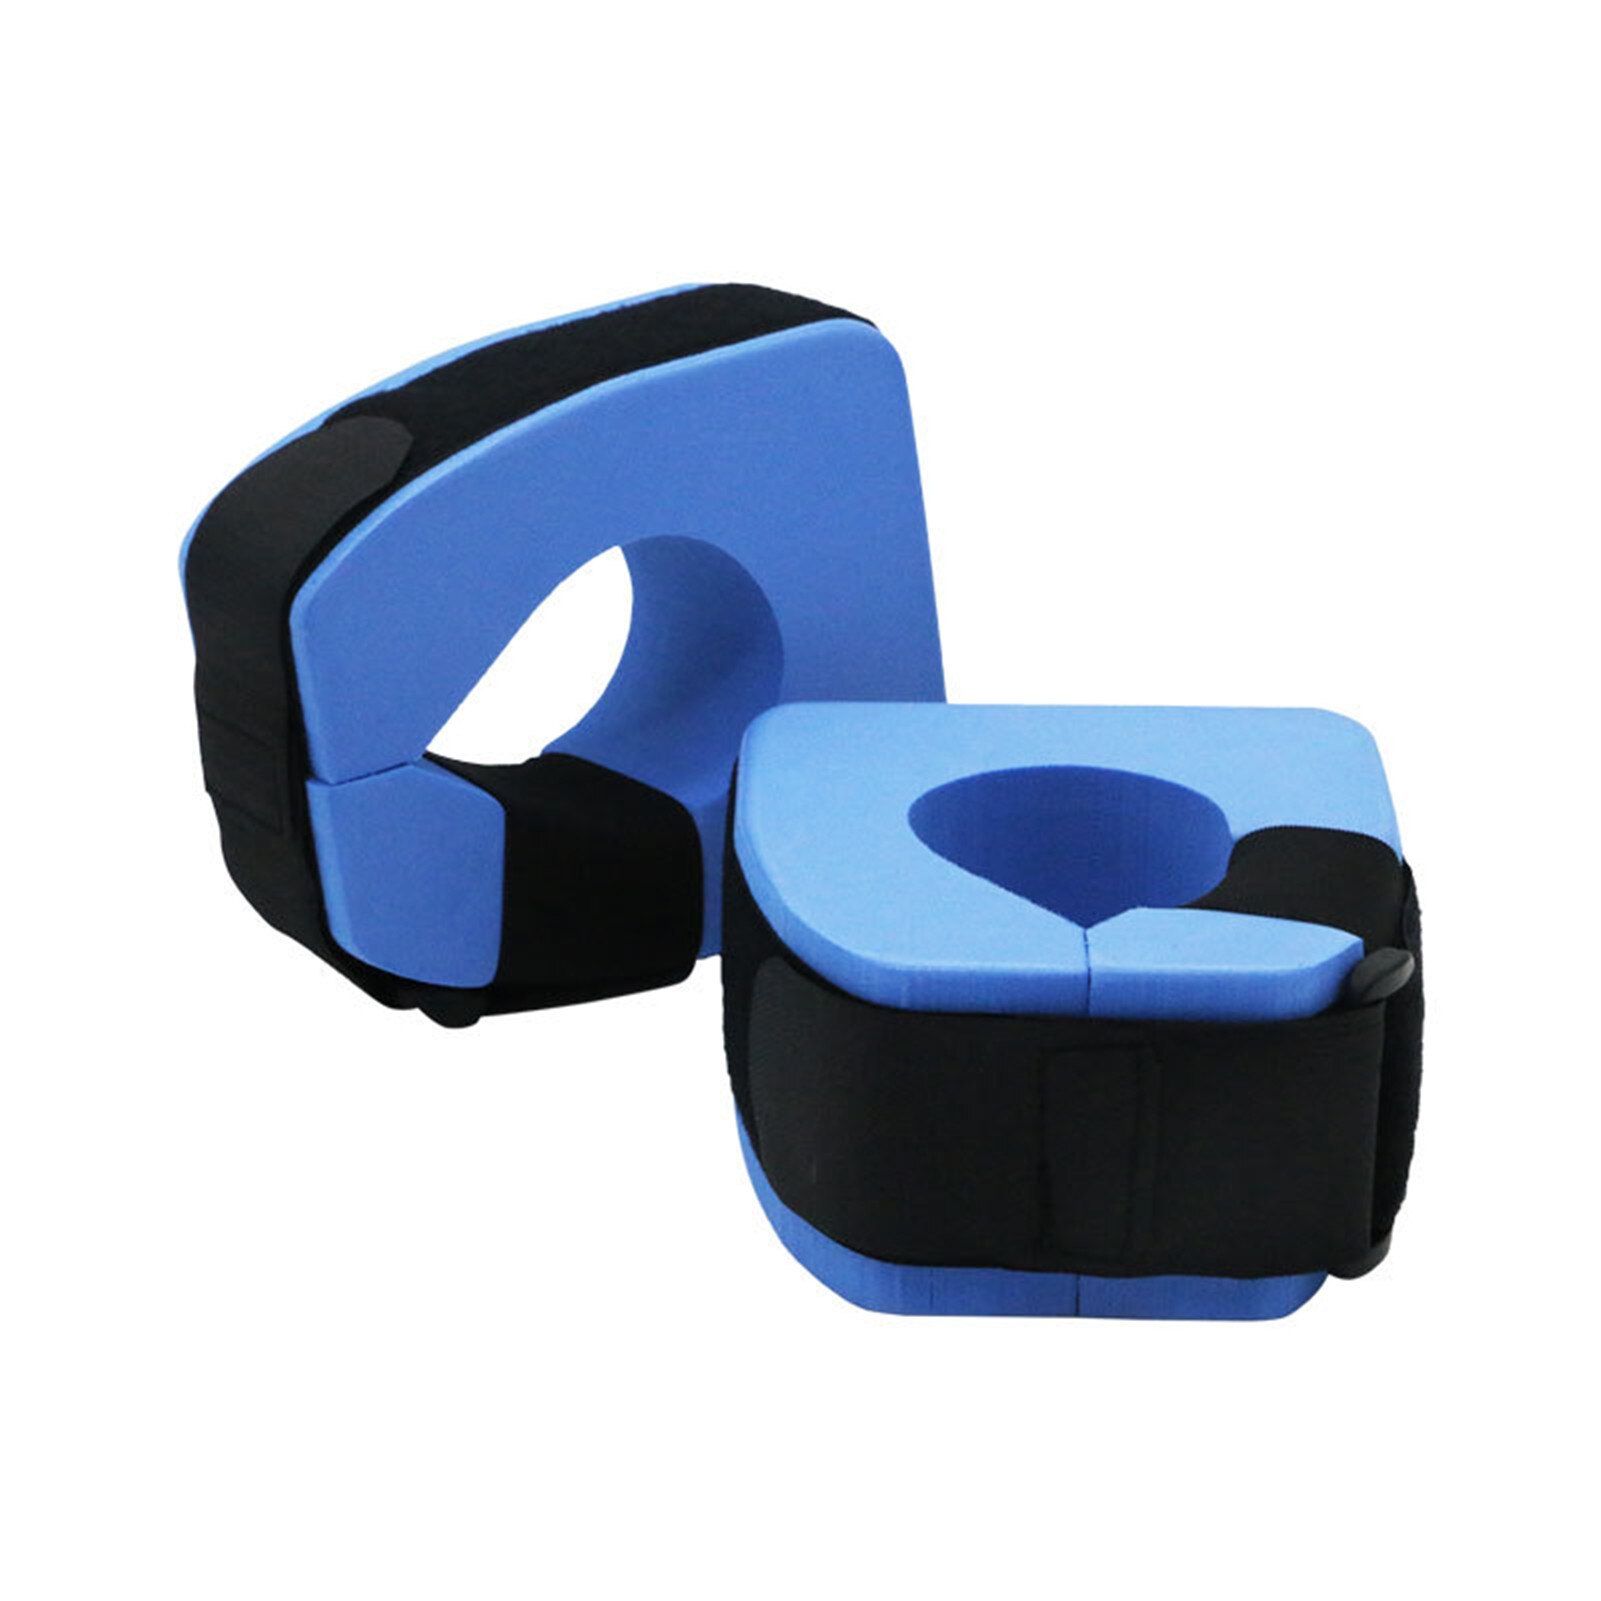 2 Pcs Blue Foam Aquatic Cuffs Swimming Leggings Arm Floating Ring Heavy Weights Water Exercise Aerobics Rings Swim Accessories